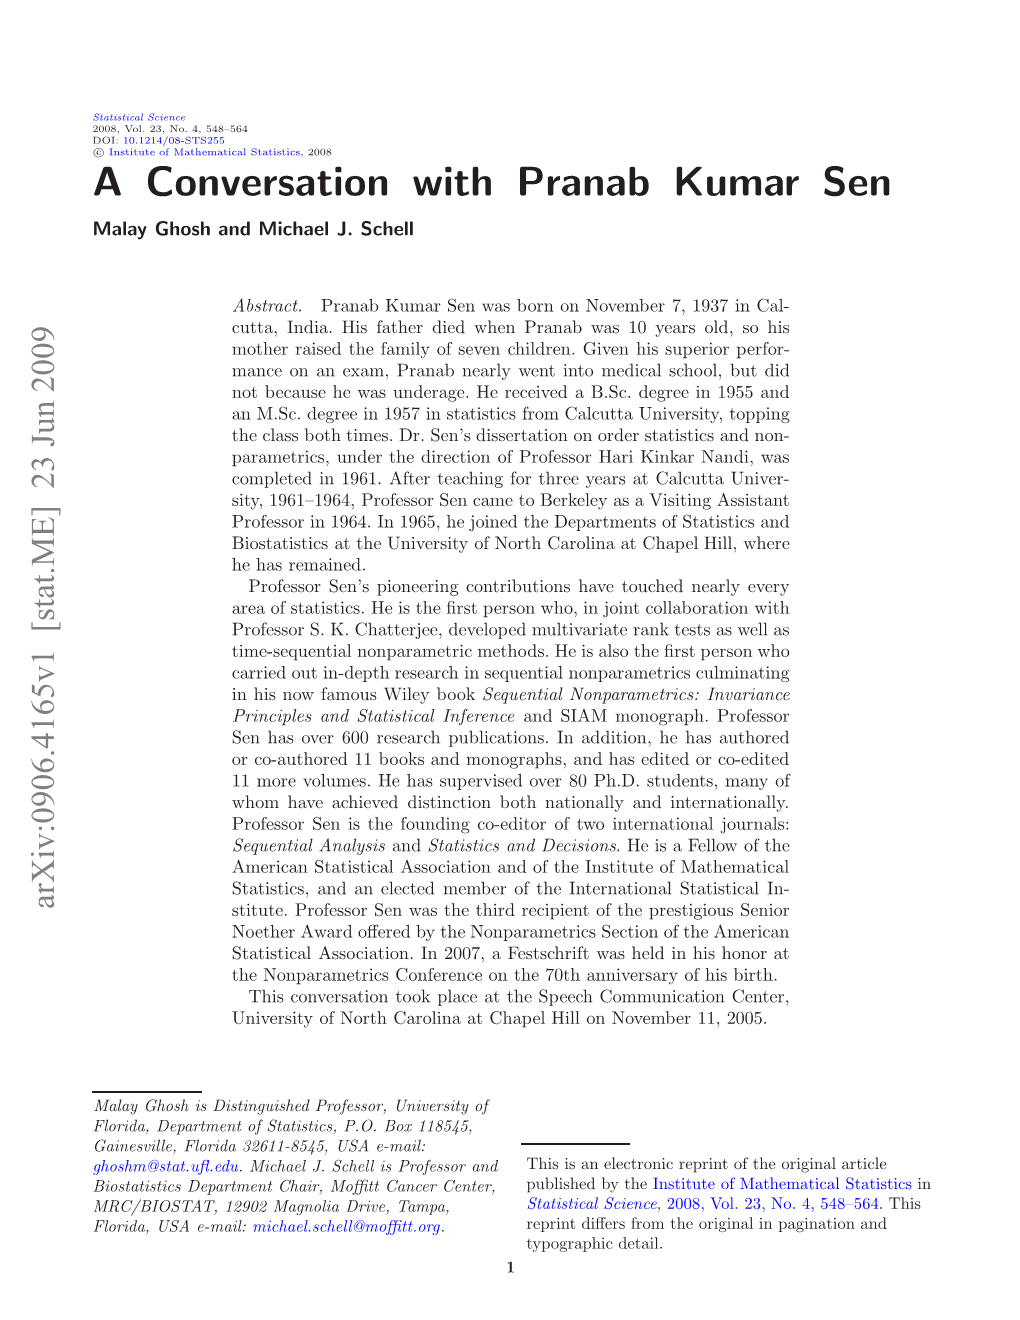 A Conversation with Pranab Kumar